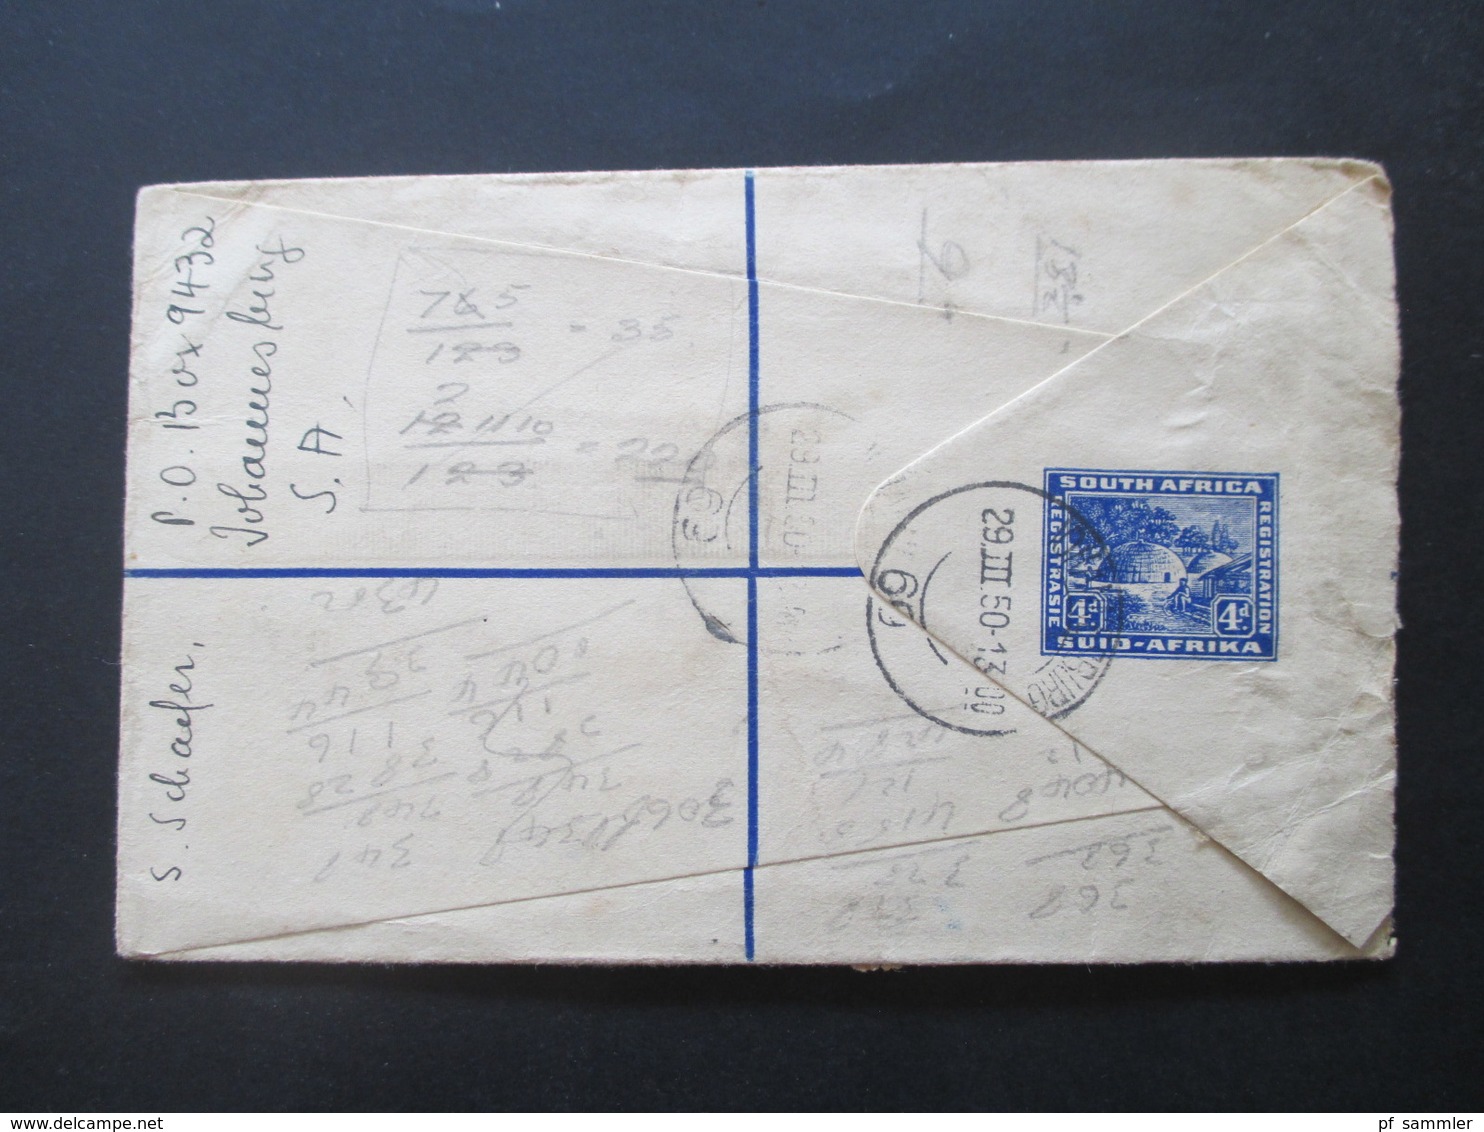 GB Kolonie Süd Afrika / South Afrika Registered Letter 1960 Johannesburg 1 Nach Pontypool England Air Mail / Luftpost - Cartas